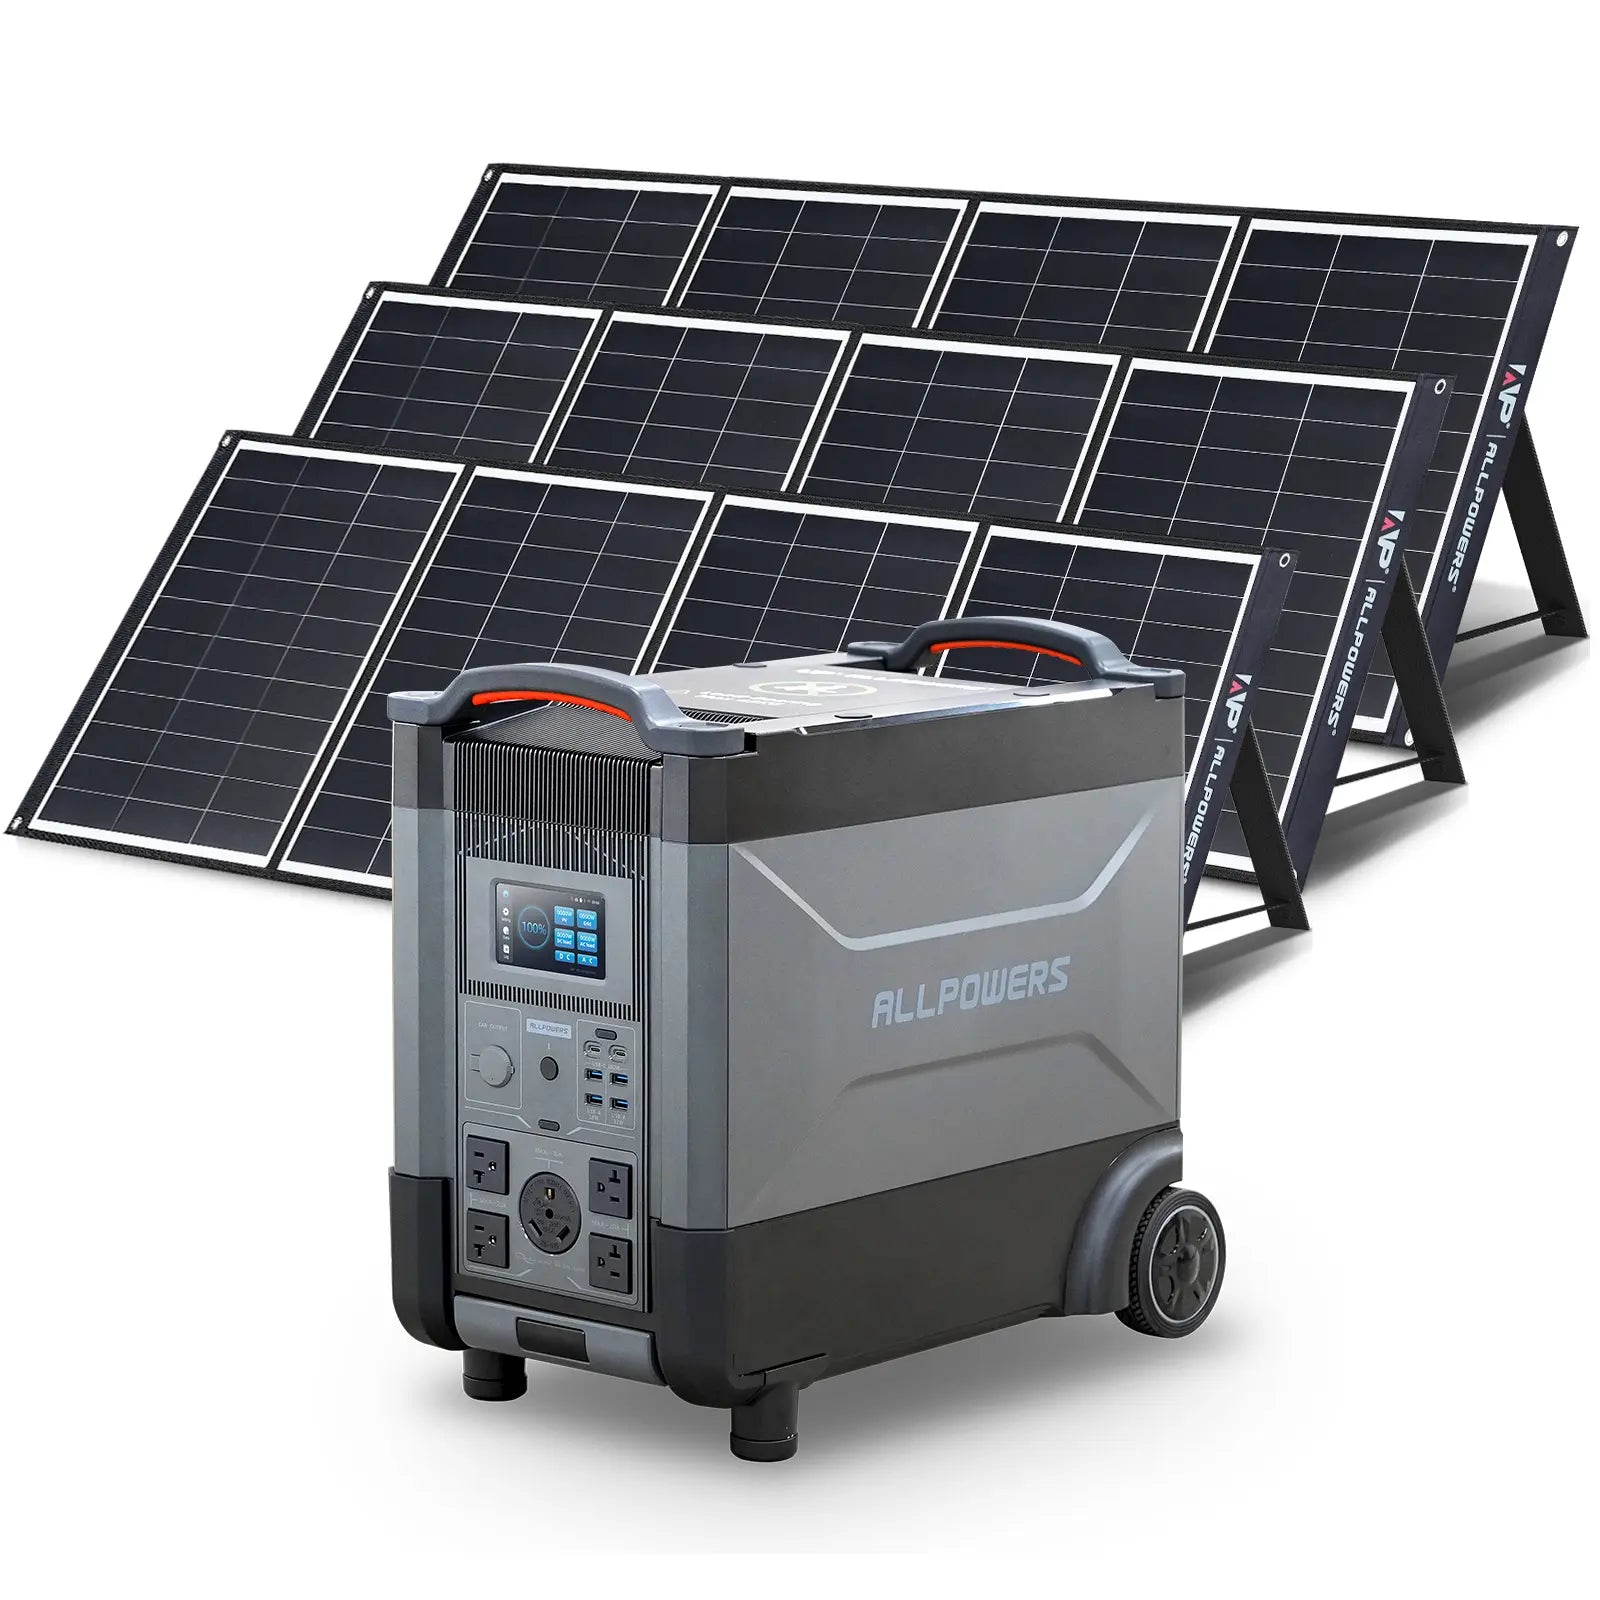 ALLPOWERS Solar Generator Kit 4000W (R4000 + 3 x SP035 200W Solar Panel)